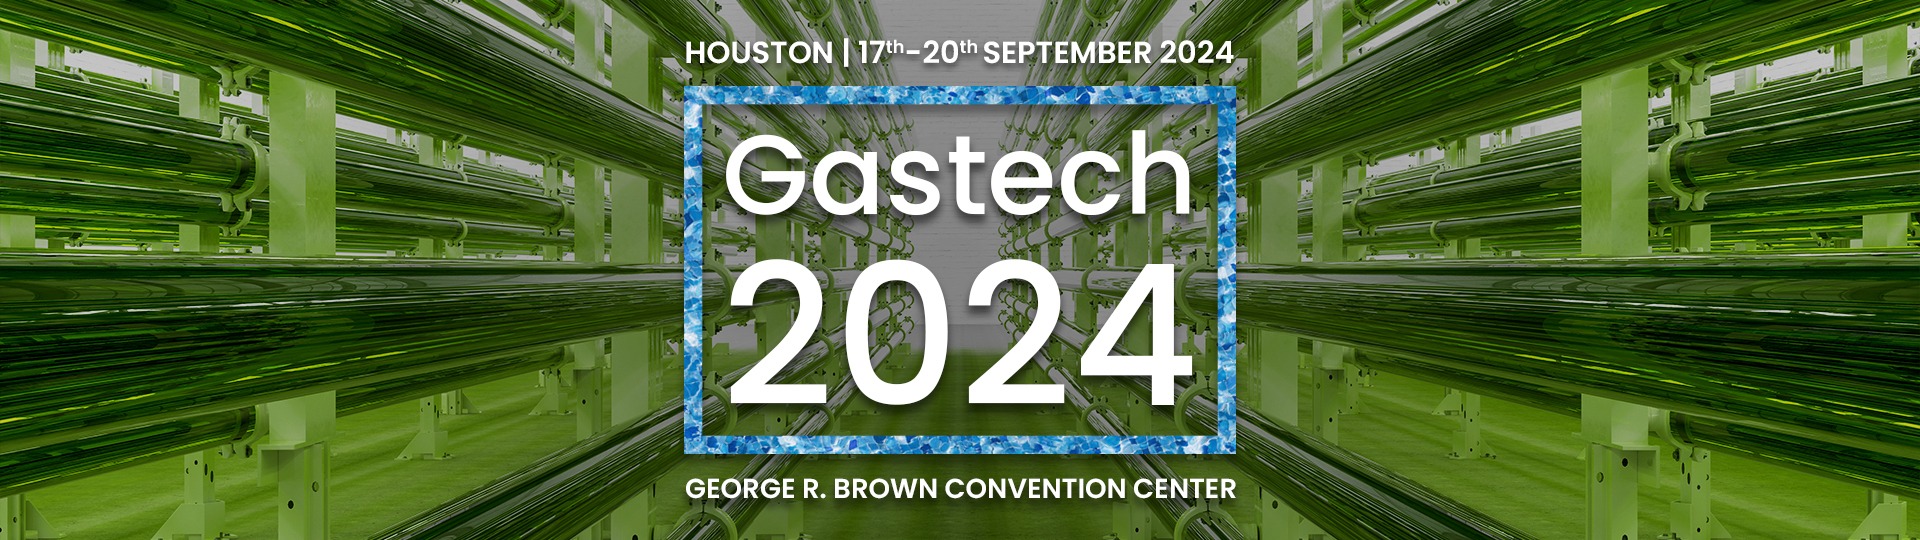 GasTech 2024